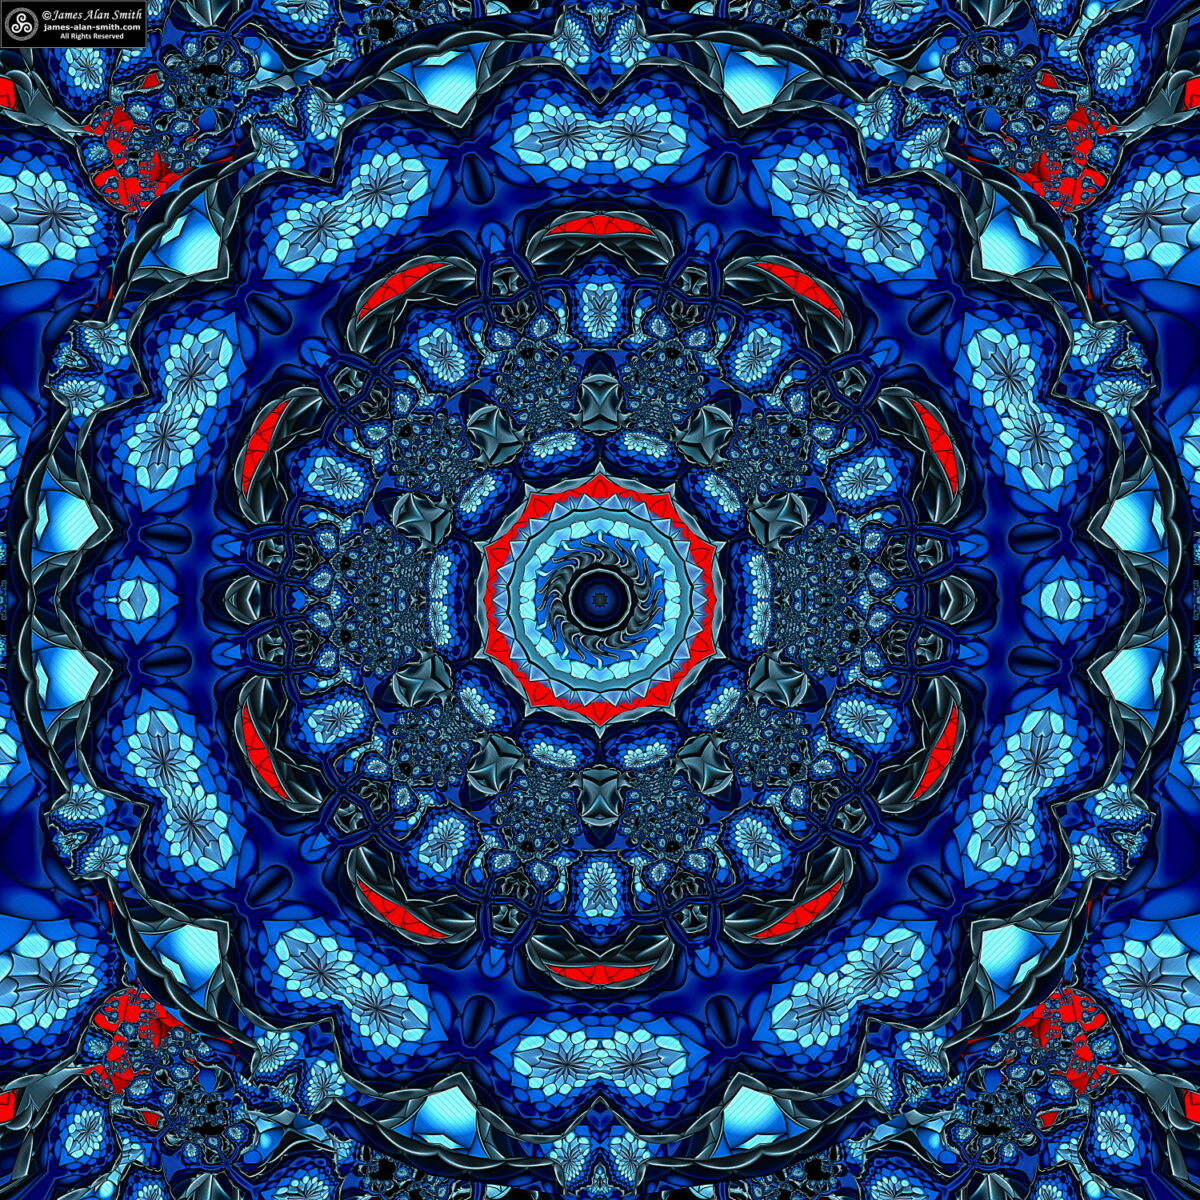 Unusual Mandala Series #010522: Artwork by James Alan Smith